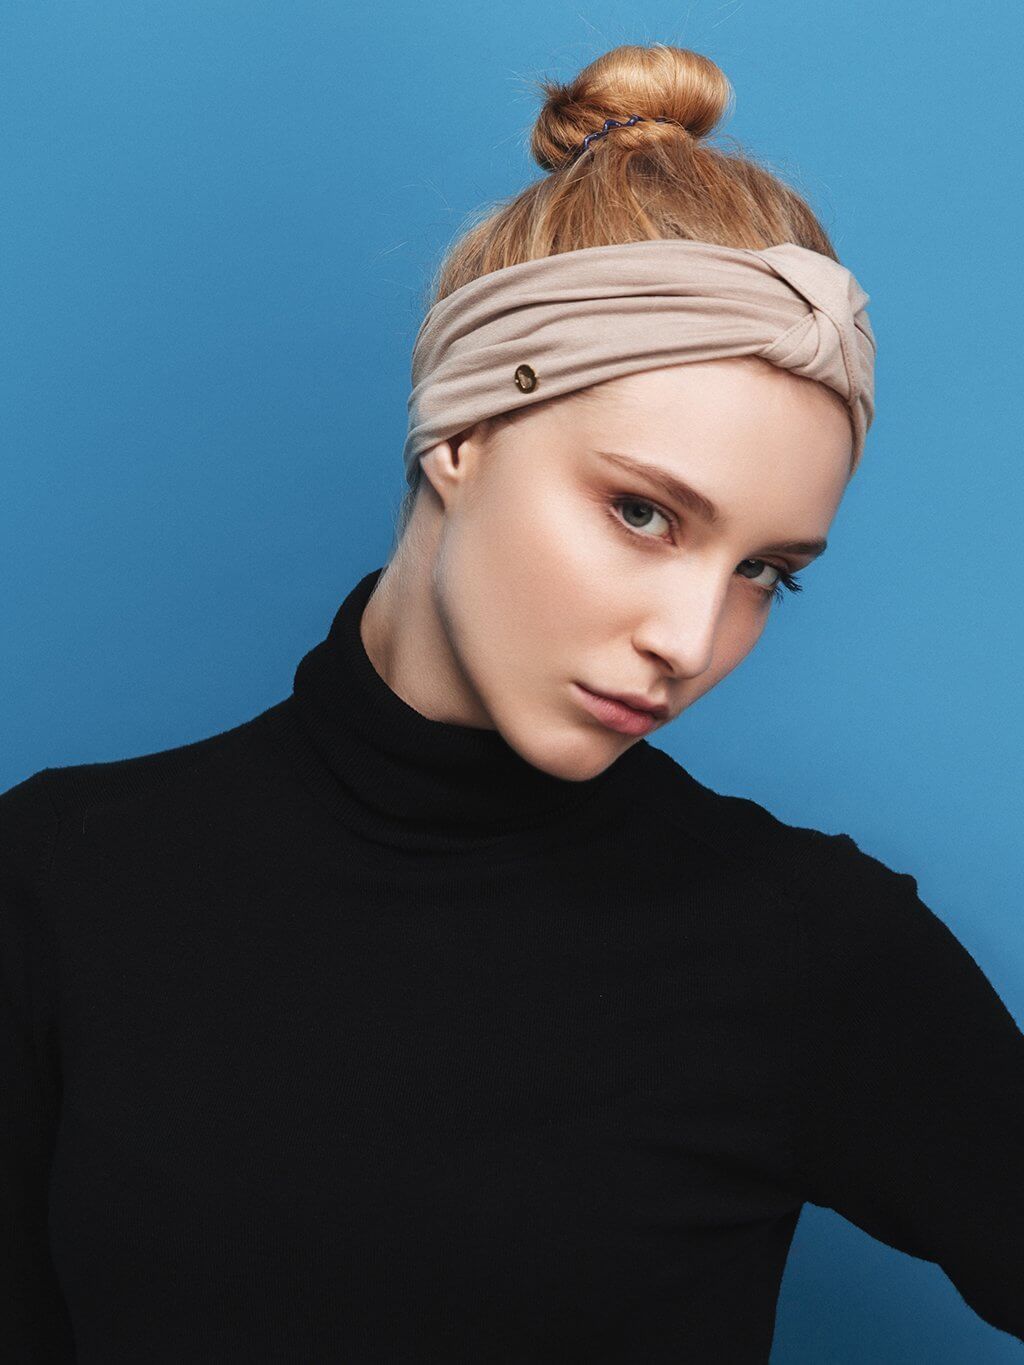 BLOM Original headband for women in Taupe. Multi style, wear 14+ ways